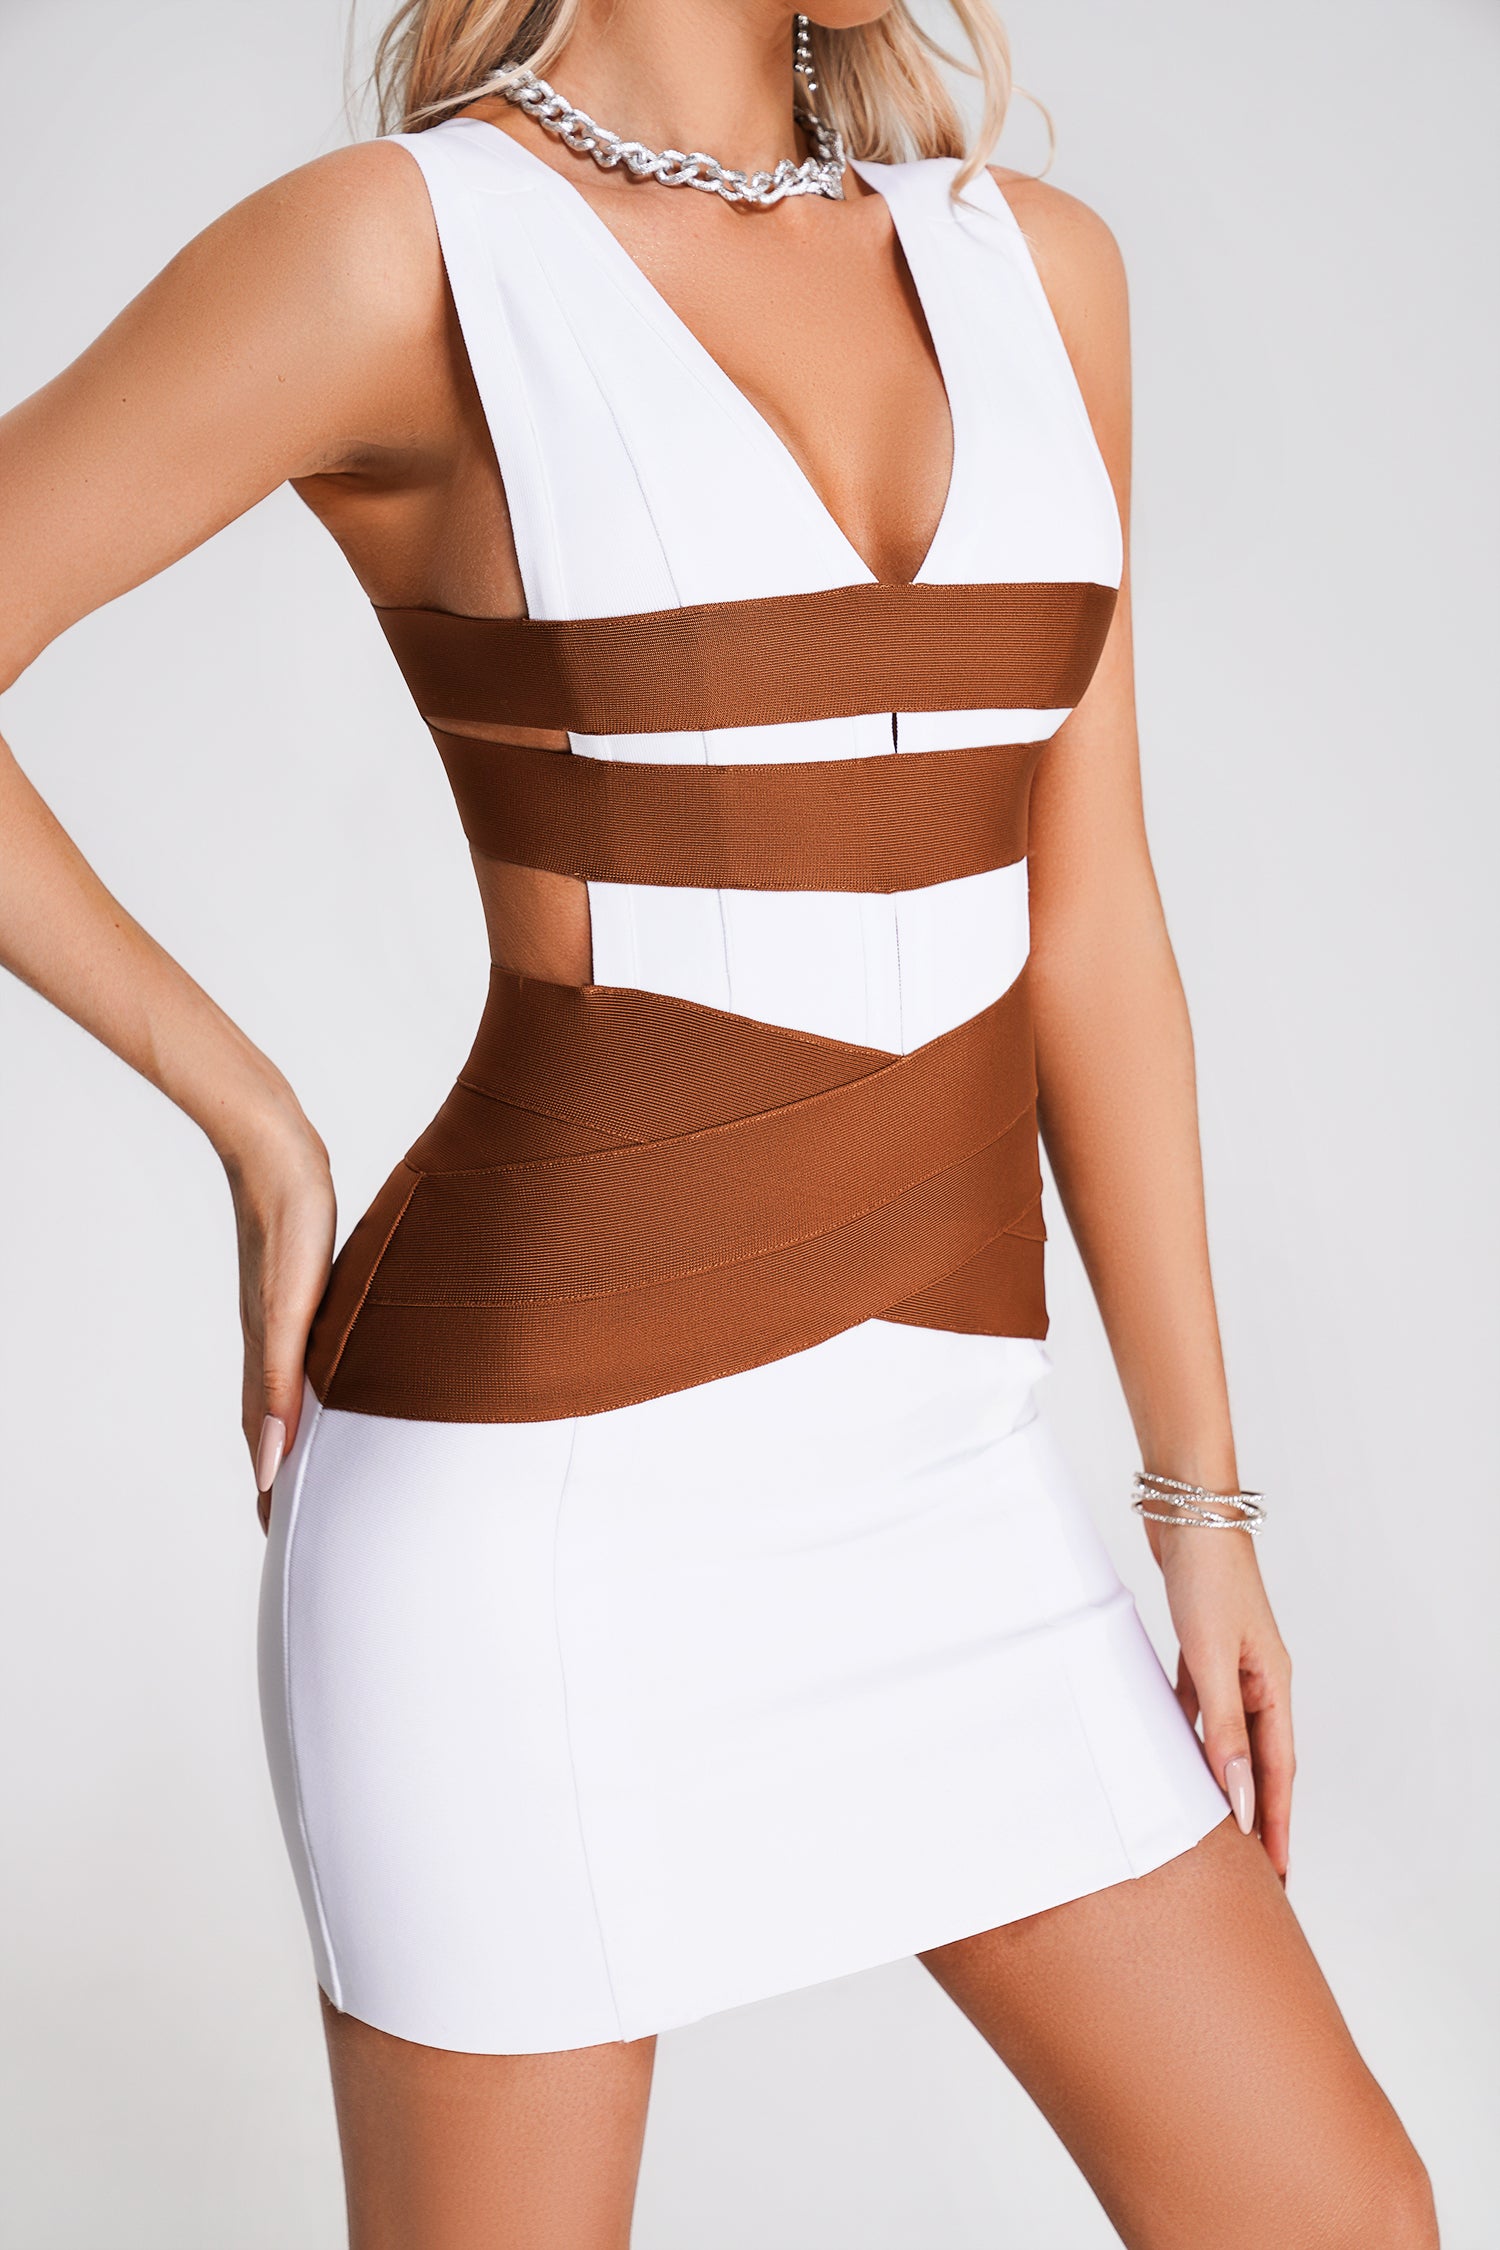 Verree Deep V-neck Bandage Dress - White & Brown